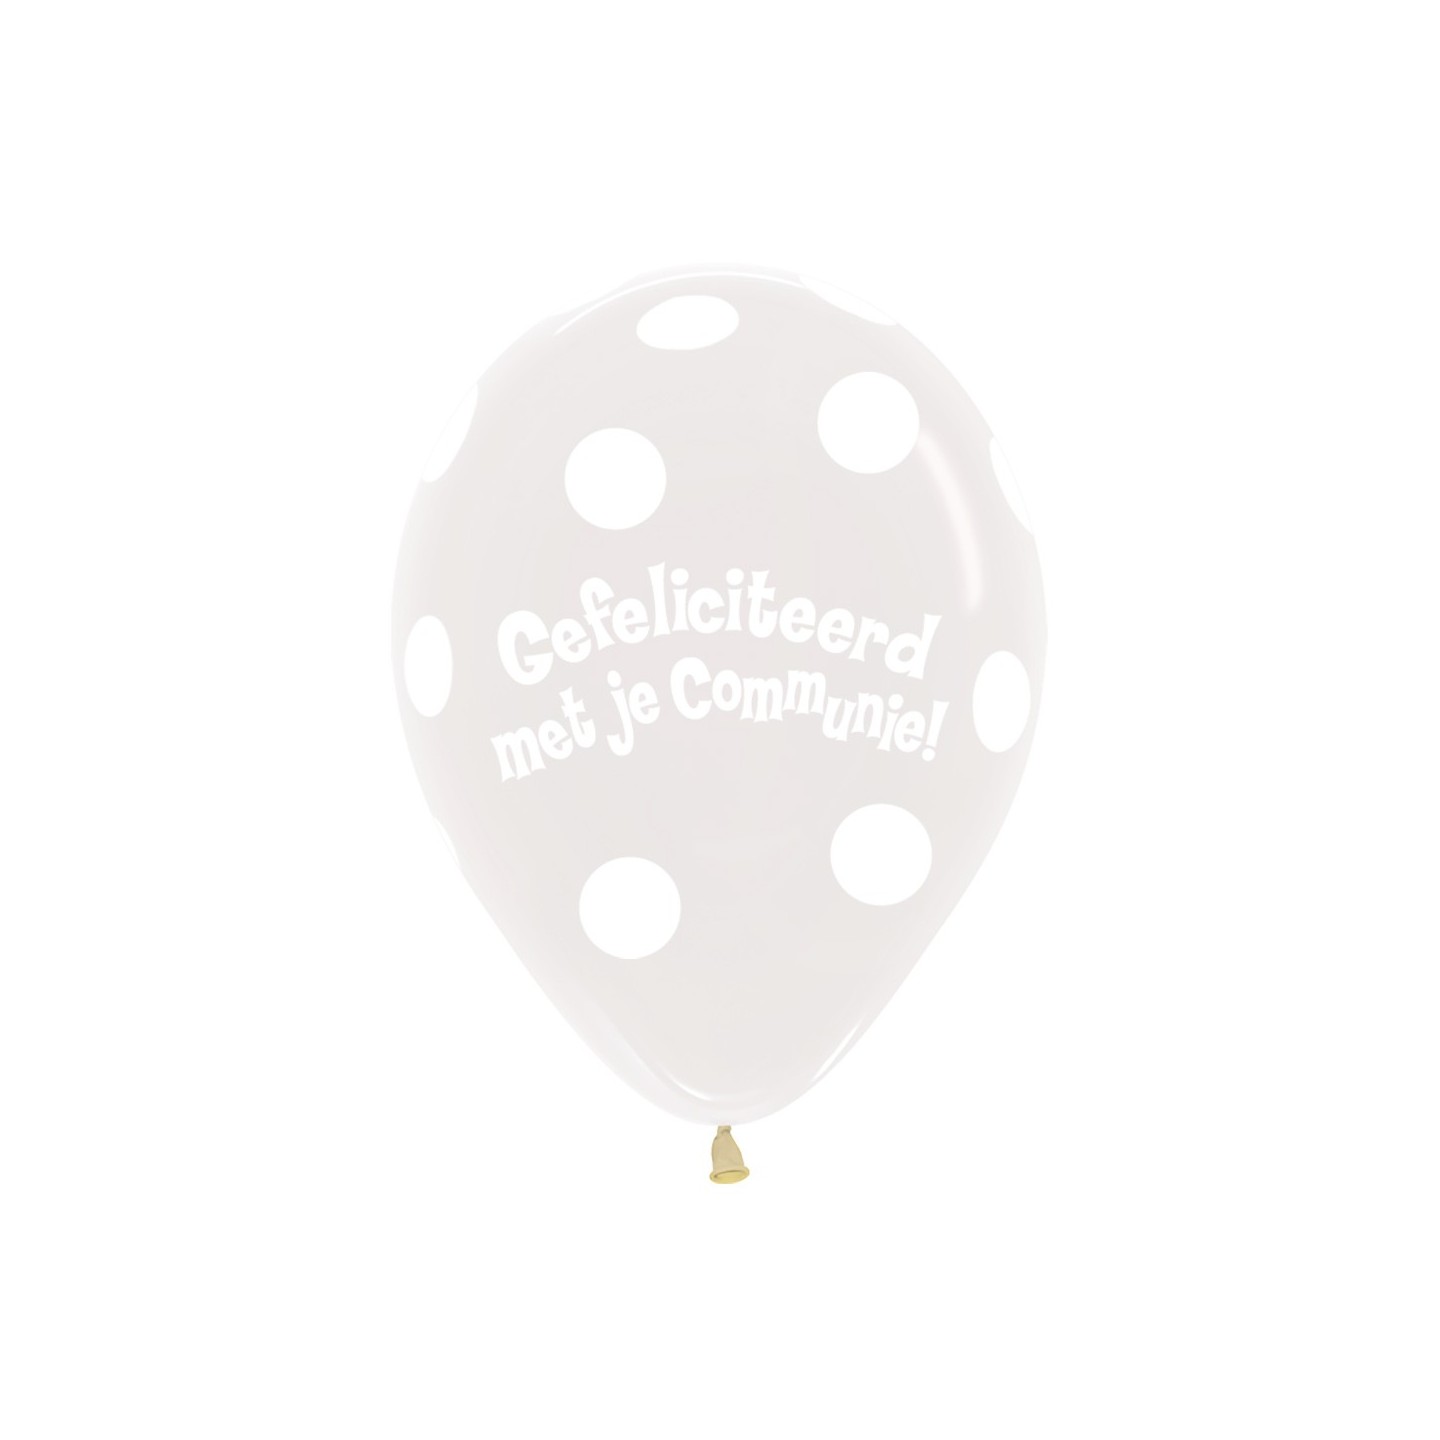 Communie ballonnen transparant wit dots versiering